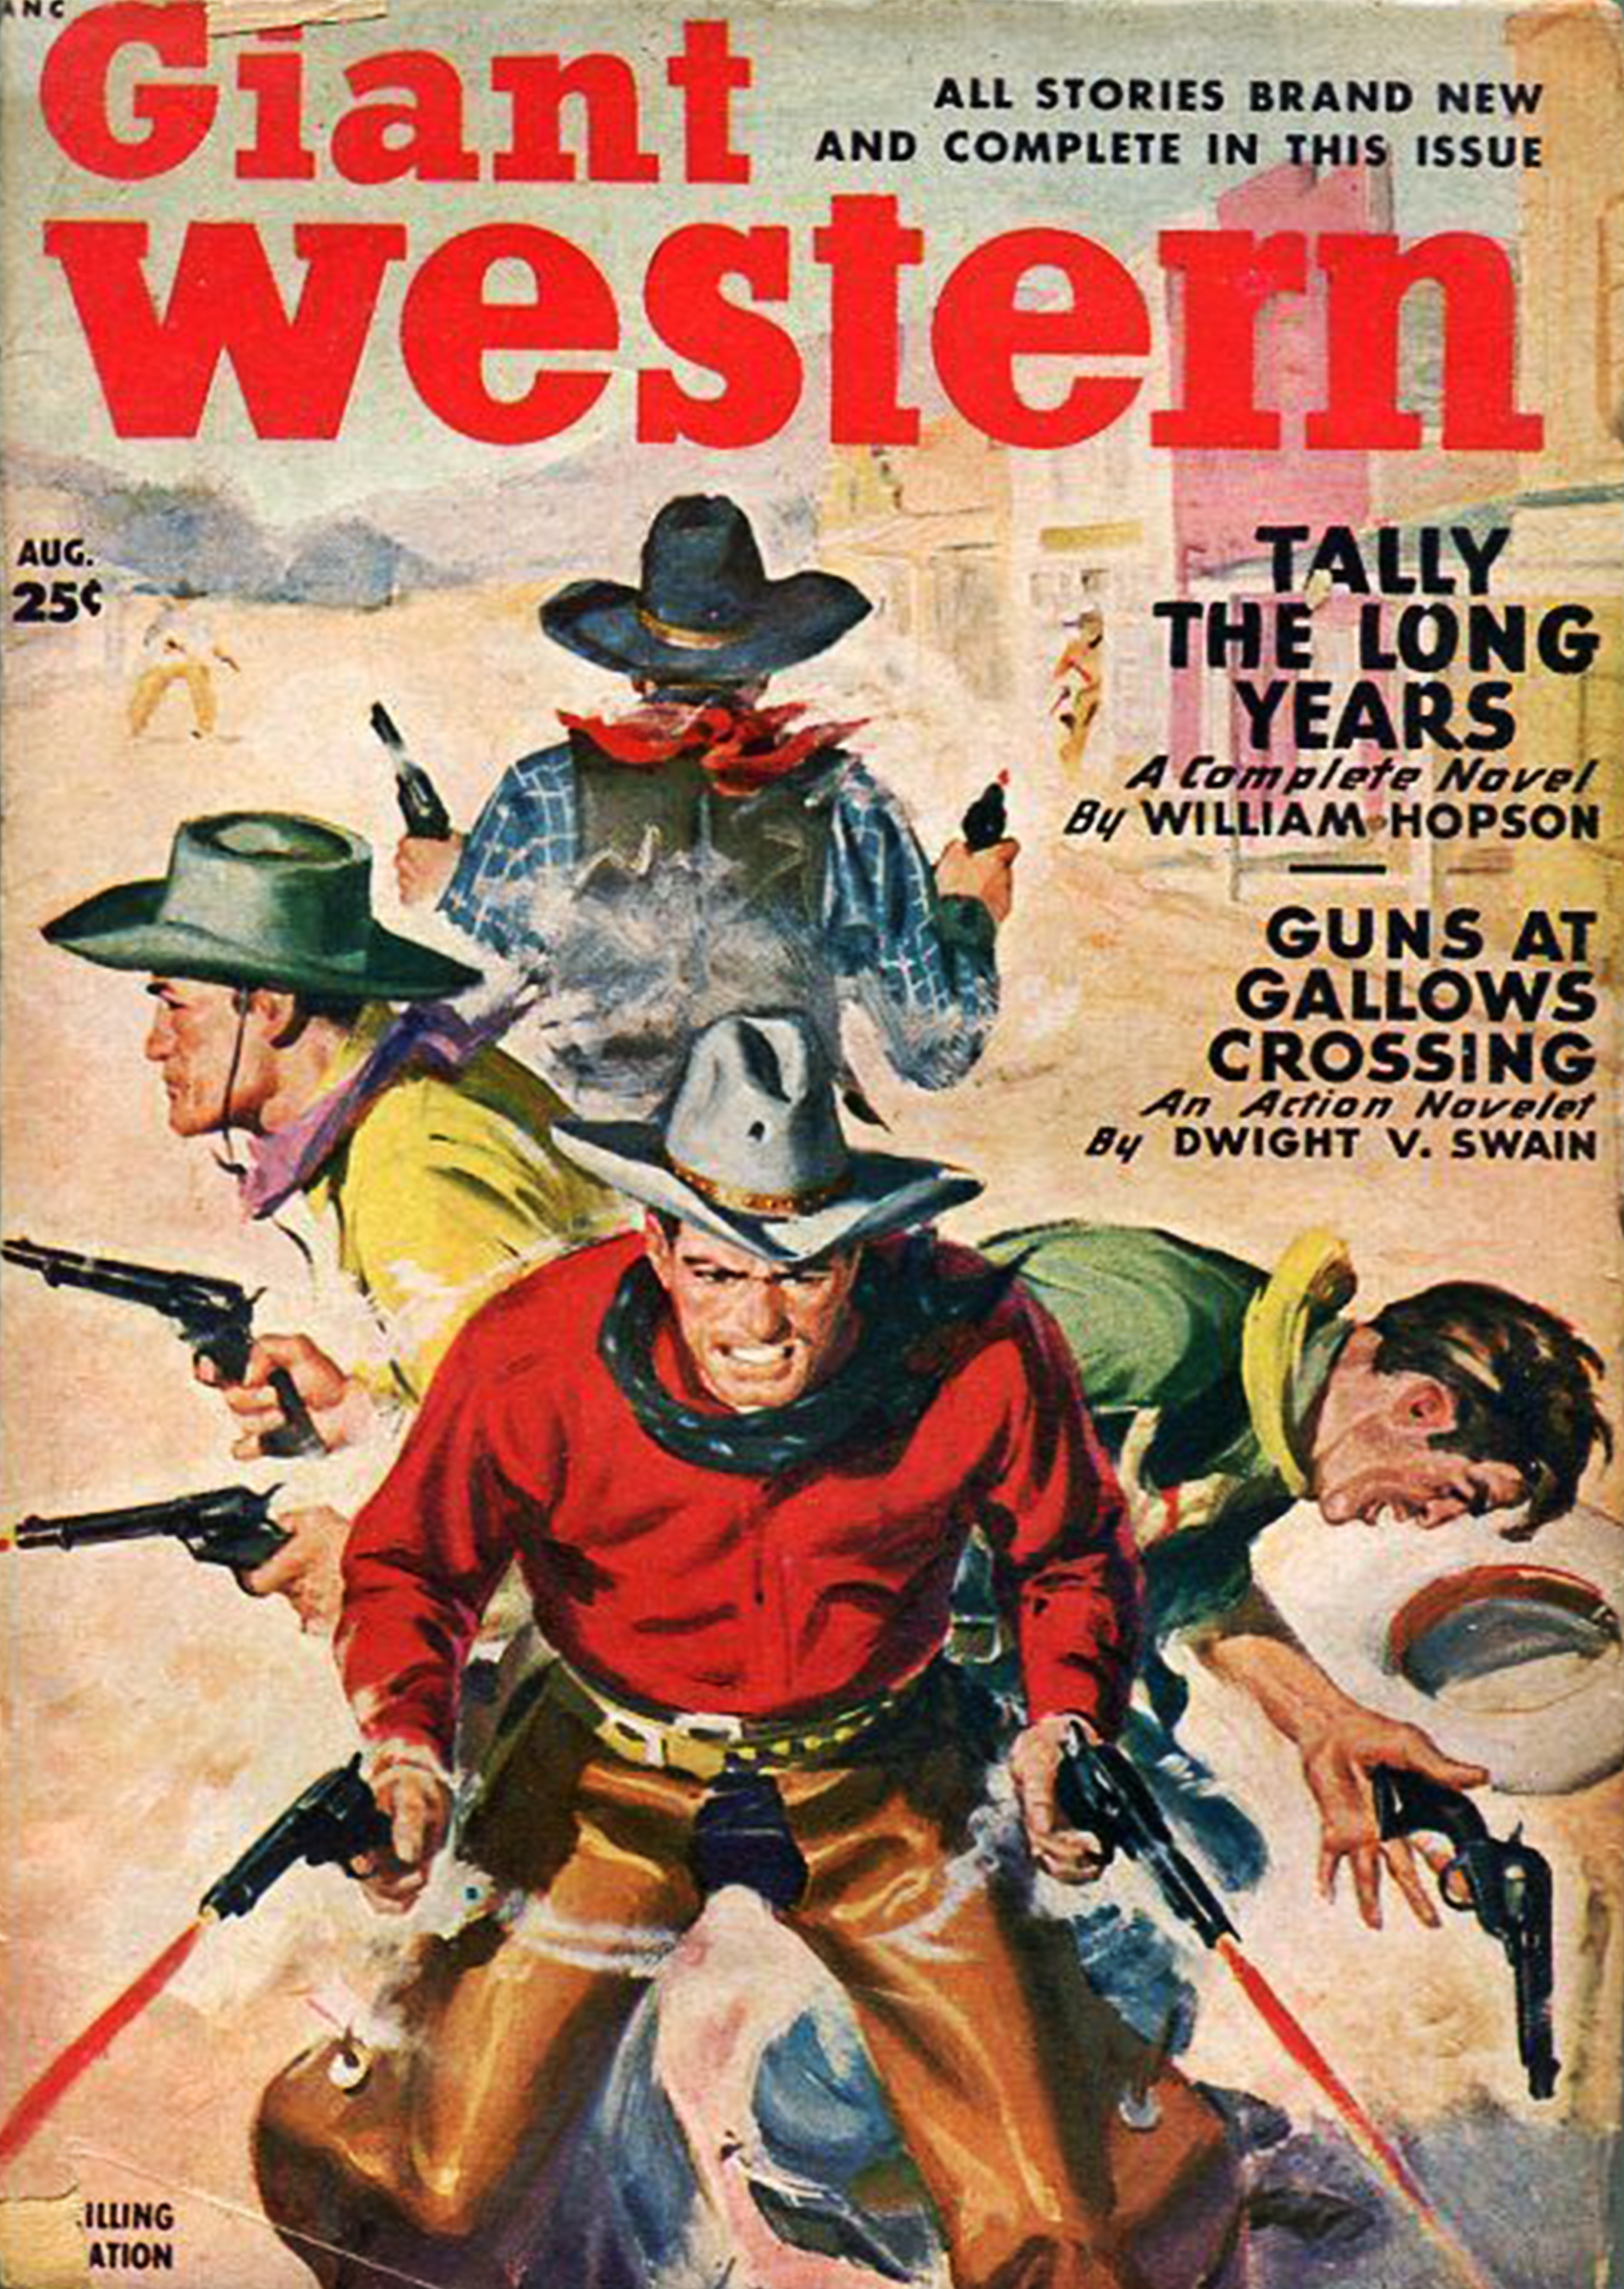 western travel magazine